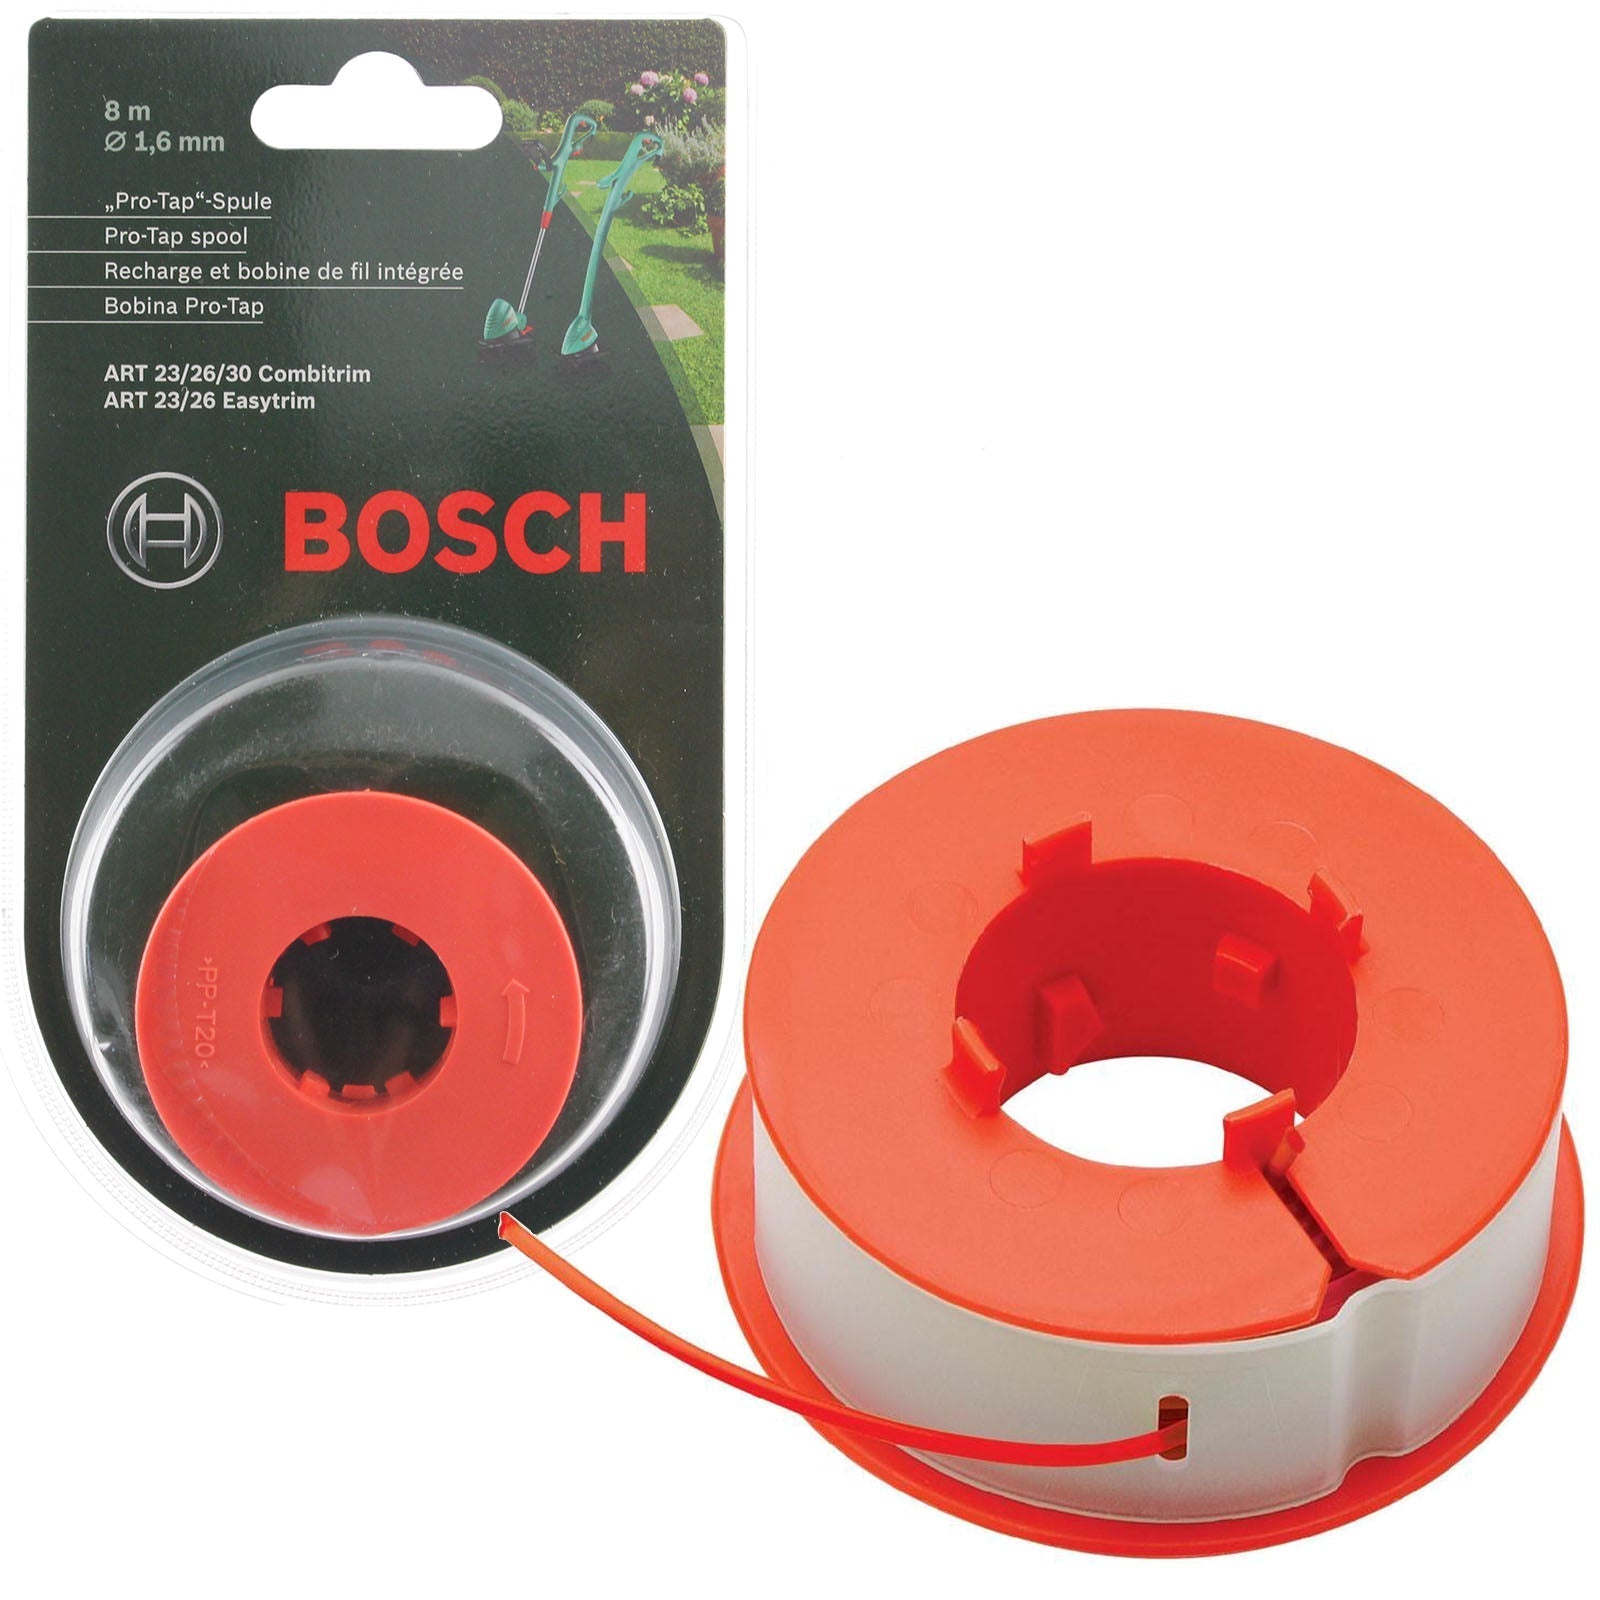 Bosch Automatic Pro-Tap Feed Spool & Line 8m ART 23 26 30 F016800175 x 2